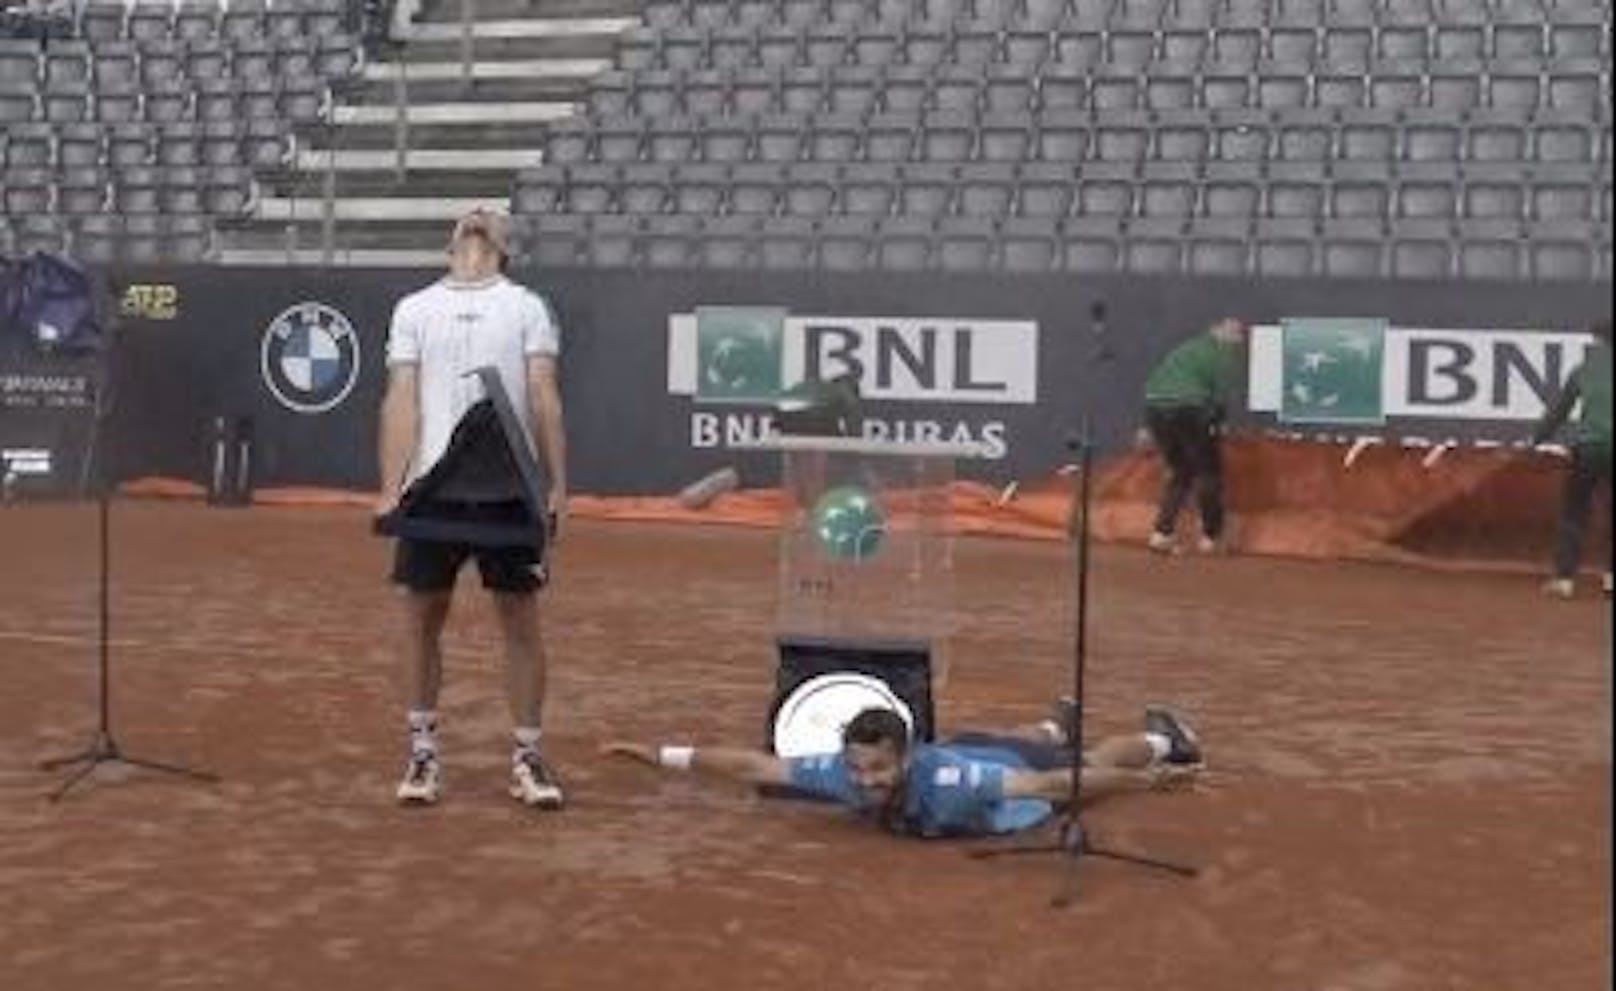 Tennis-Ass Hugo Nys schwimmt in Rom im Sand.&nbsp;